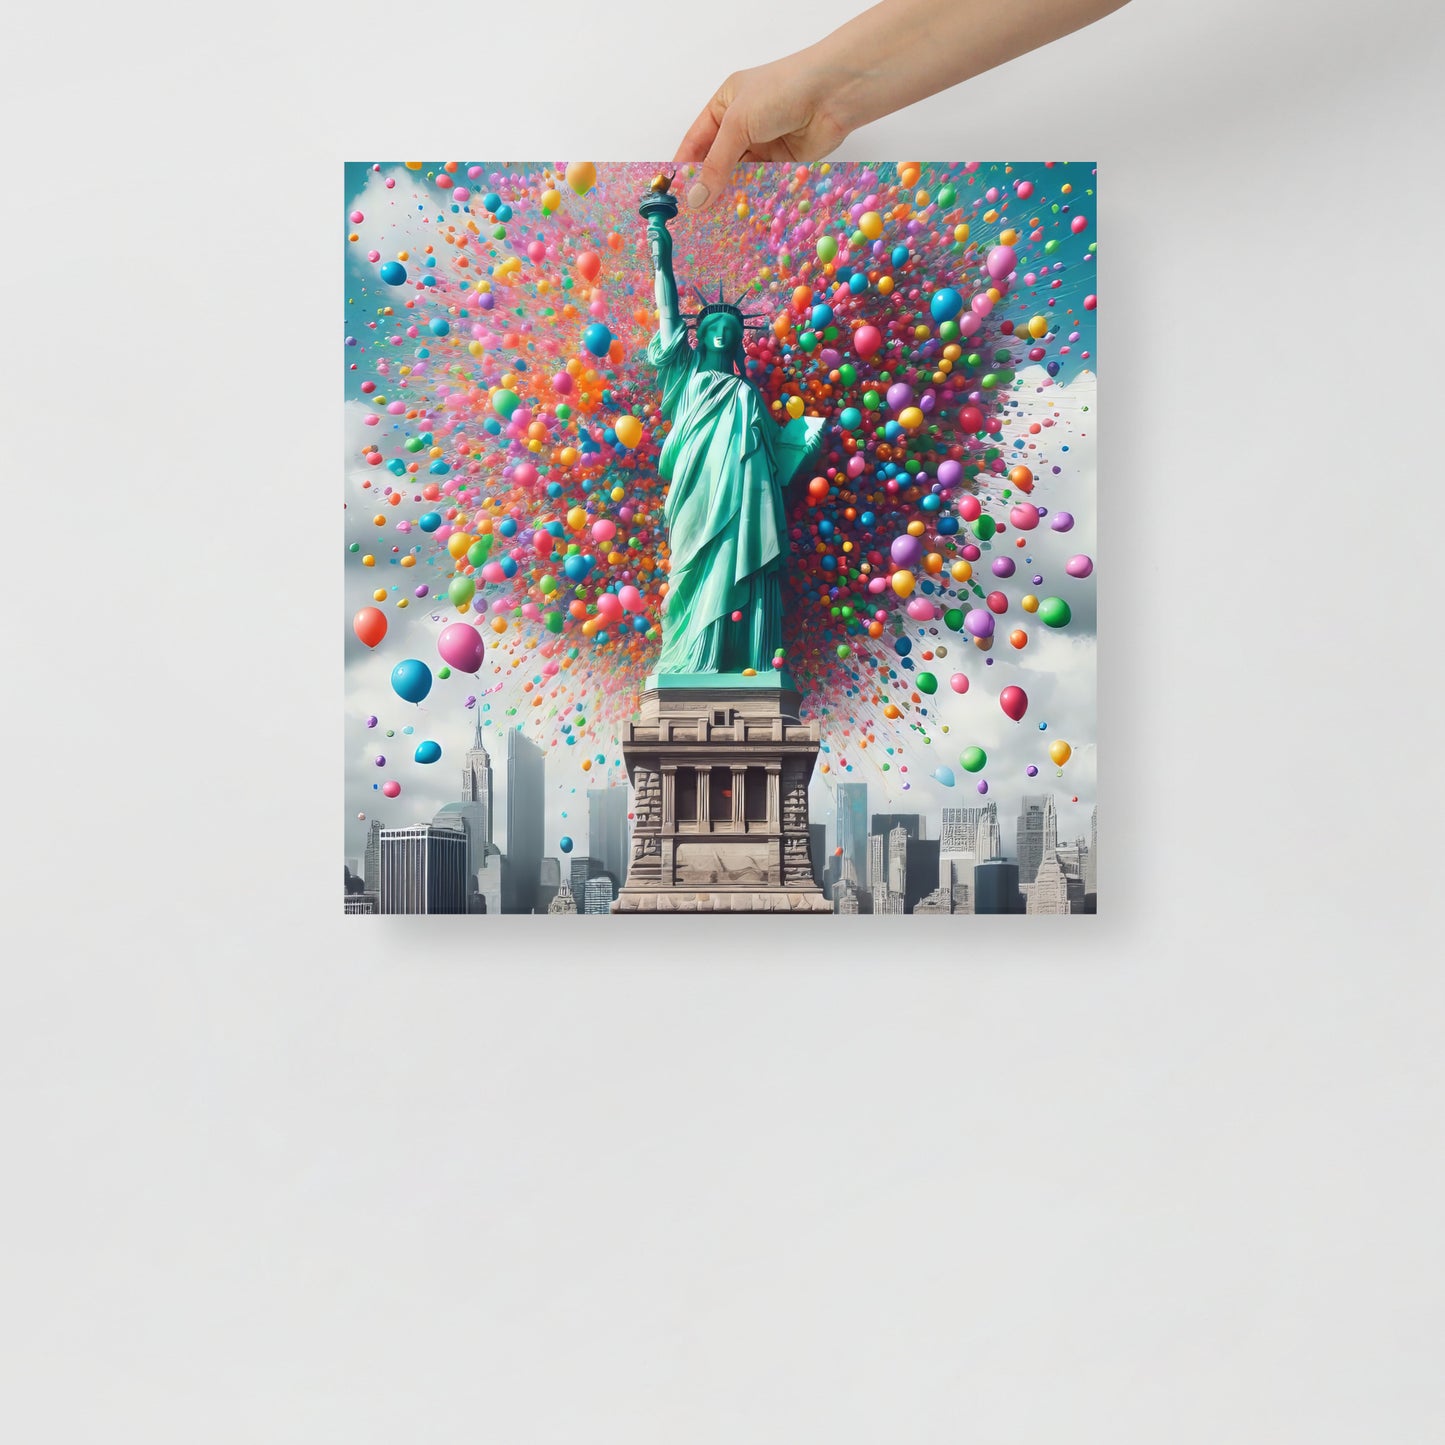 Balloon Shower at Statue of Liberty - Art Print